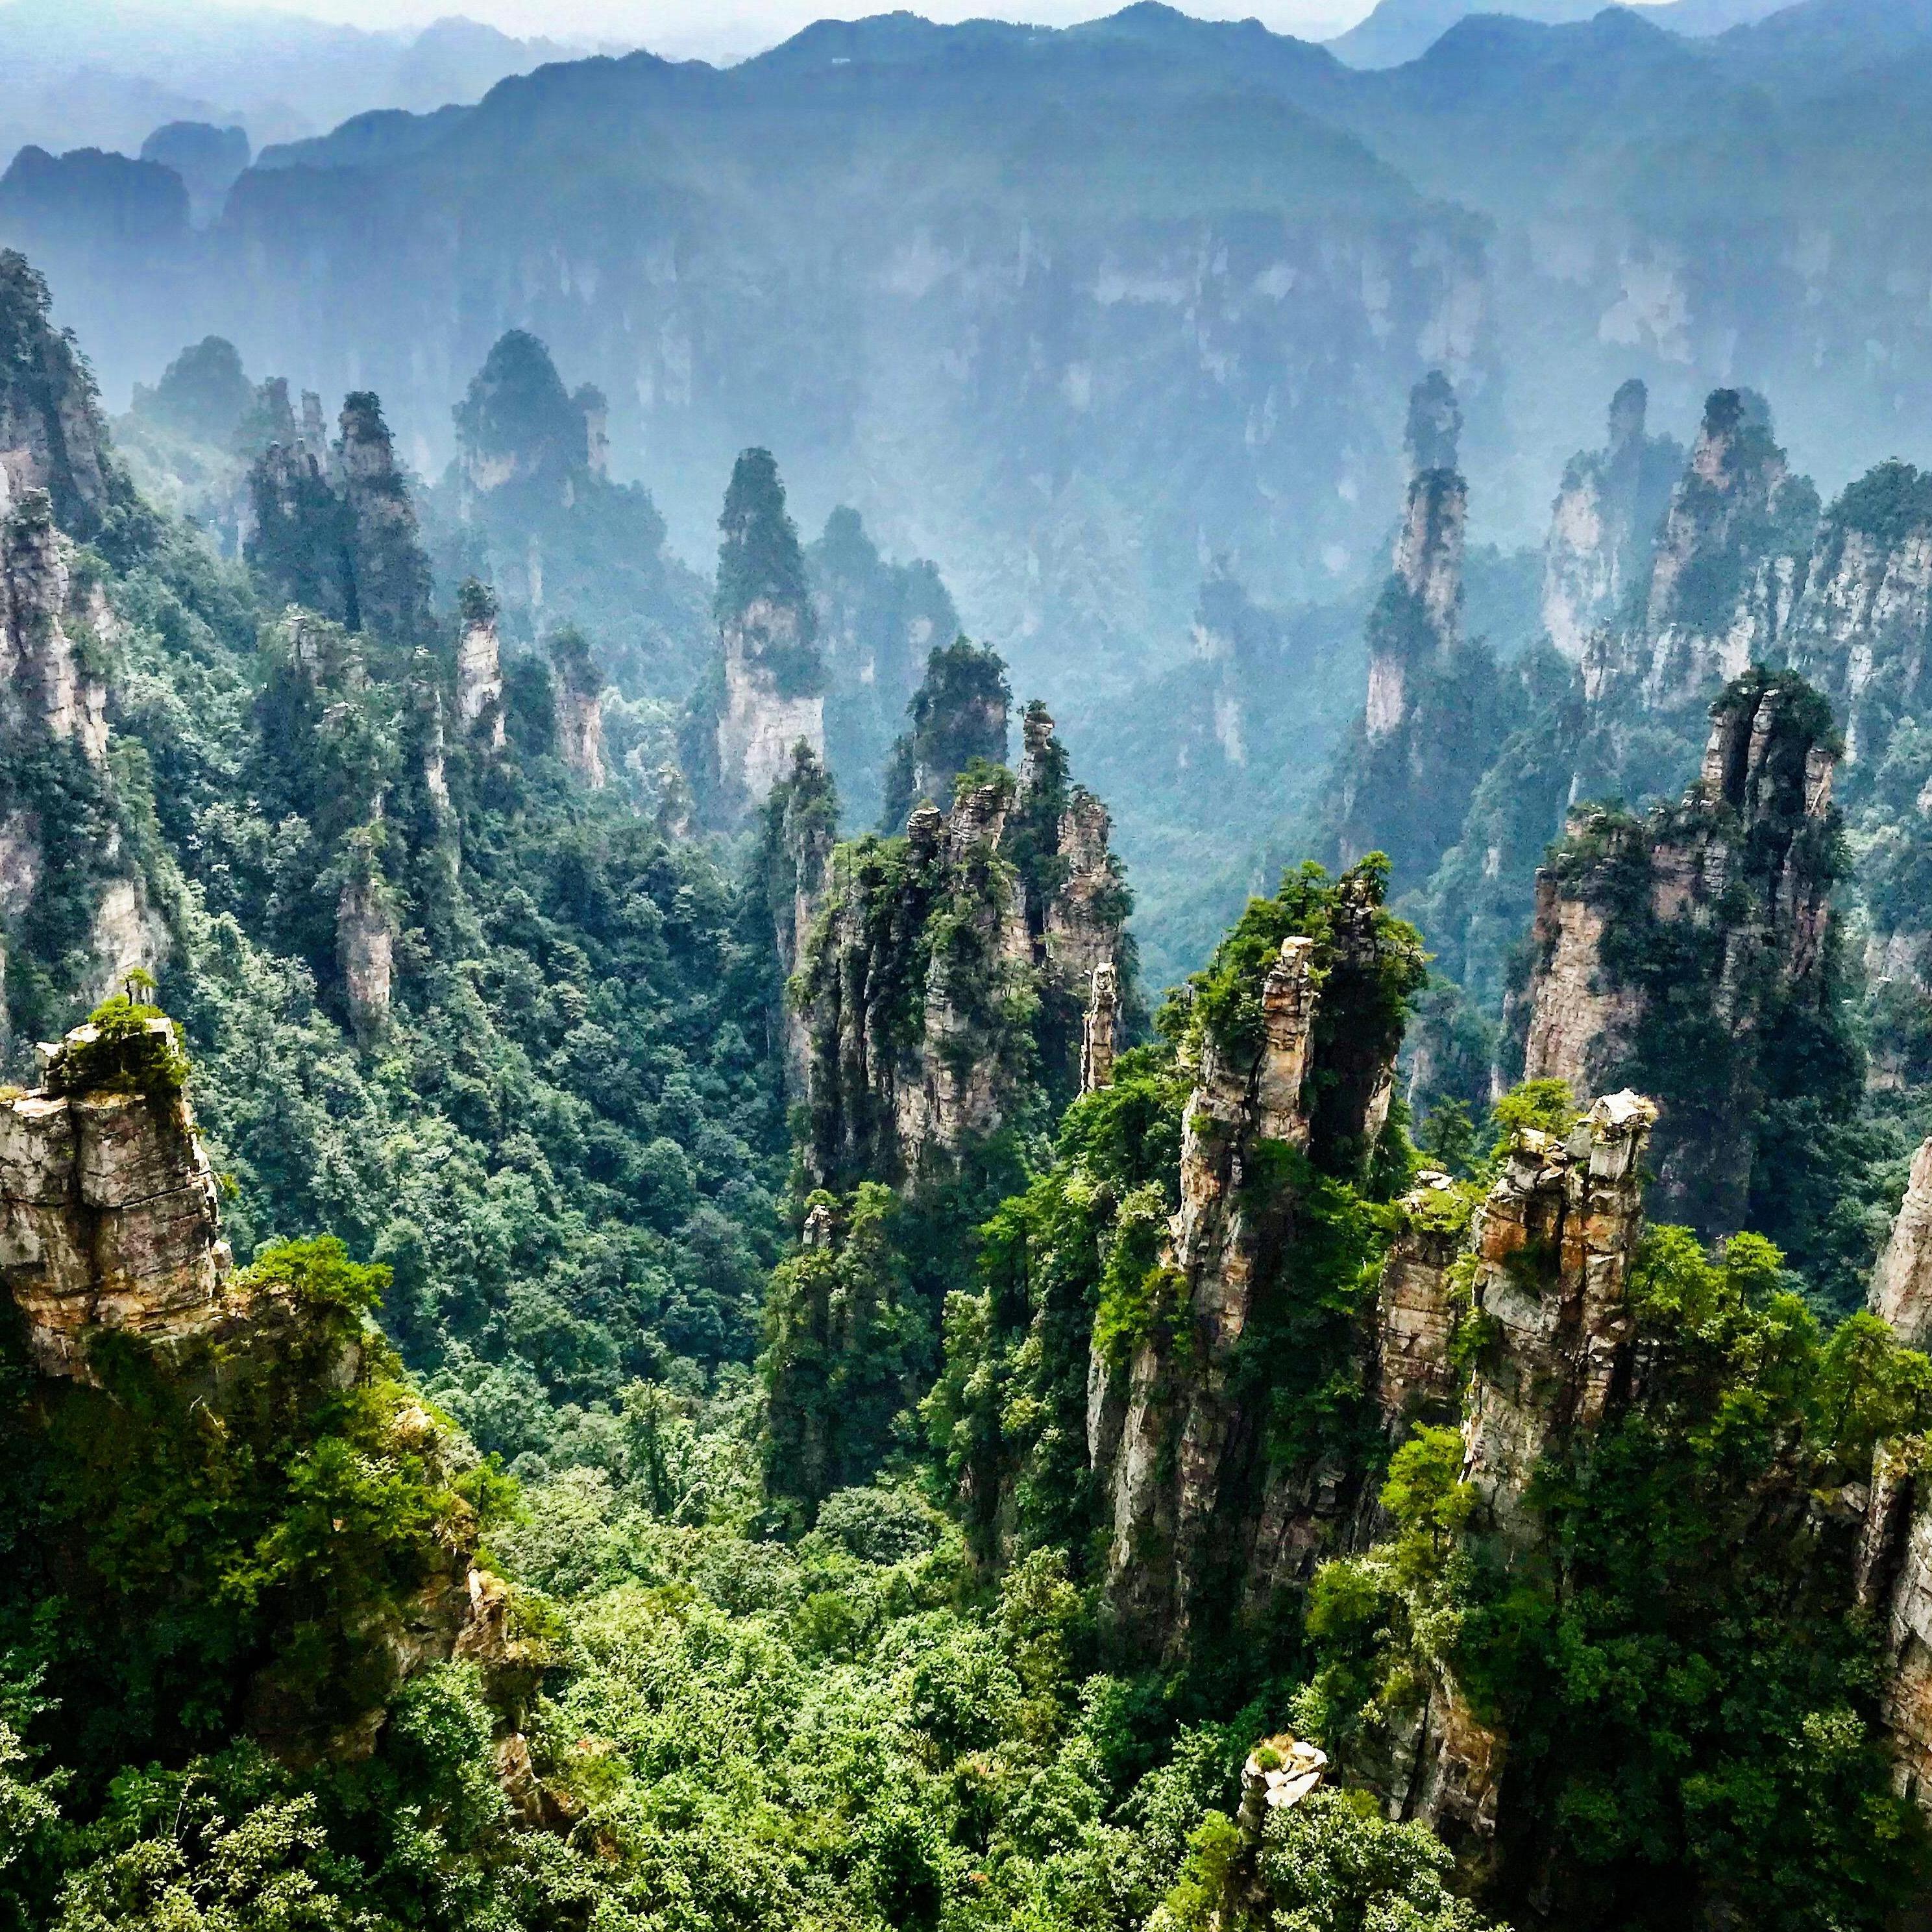 The unreal "Avatar" mountains of Zhangjiajie, China
2019